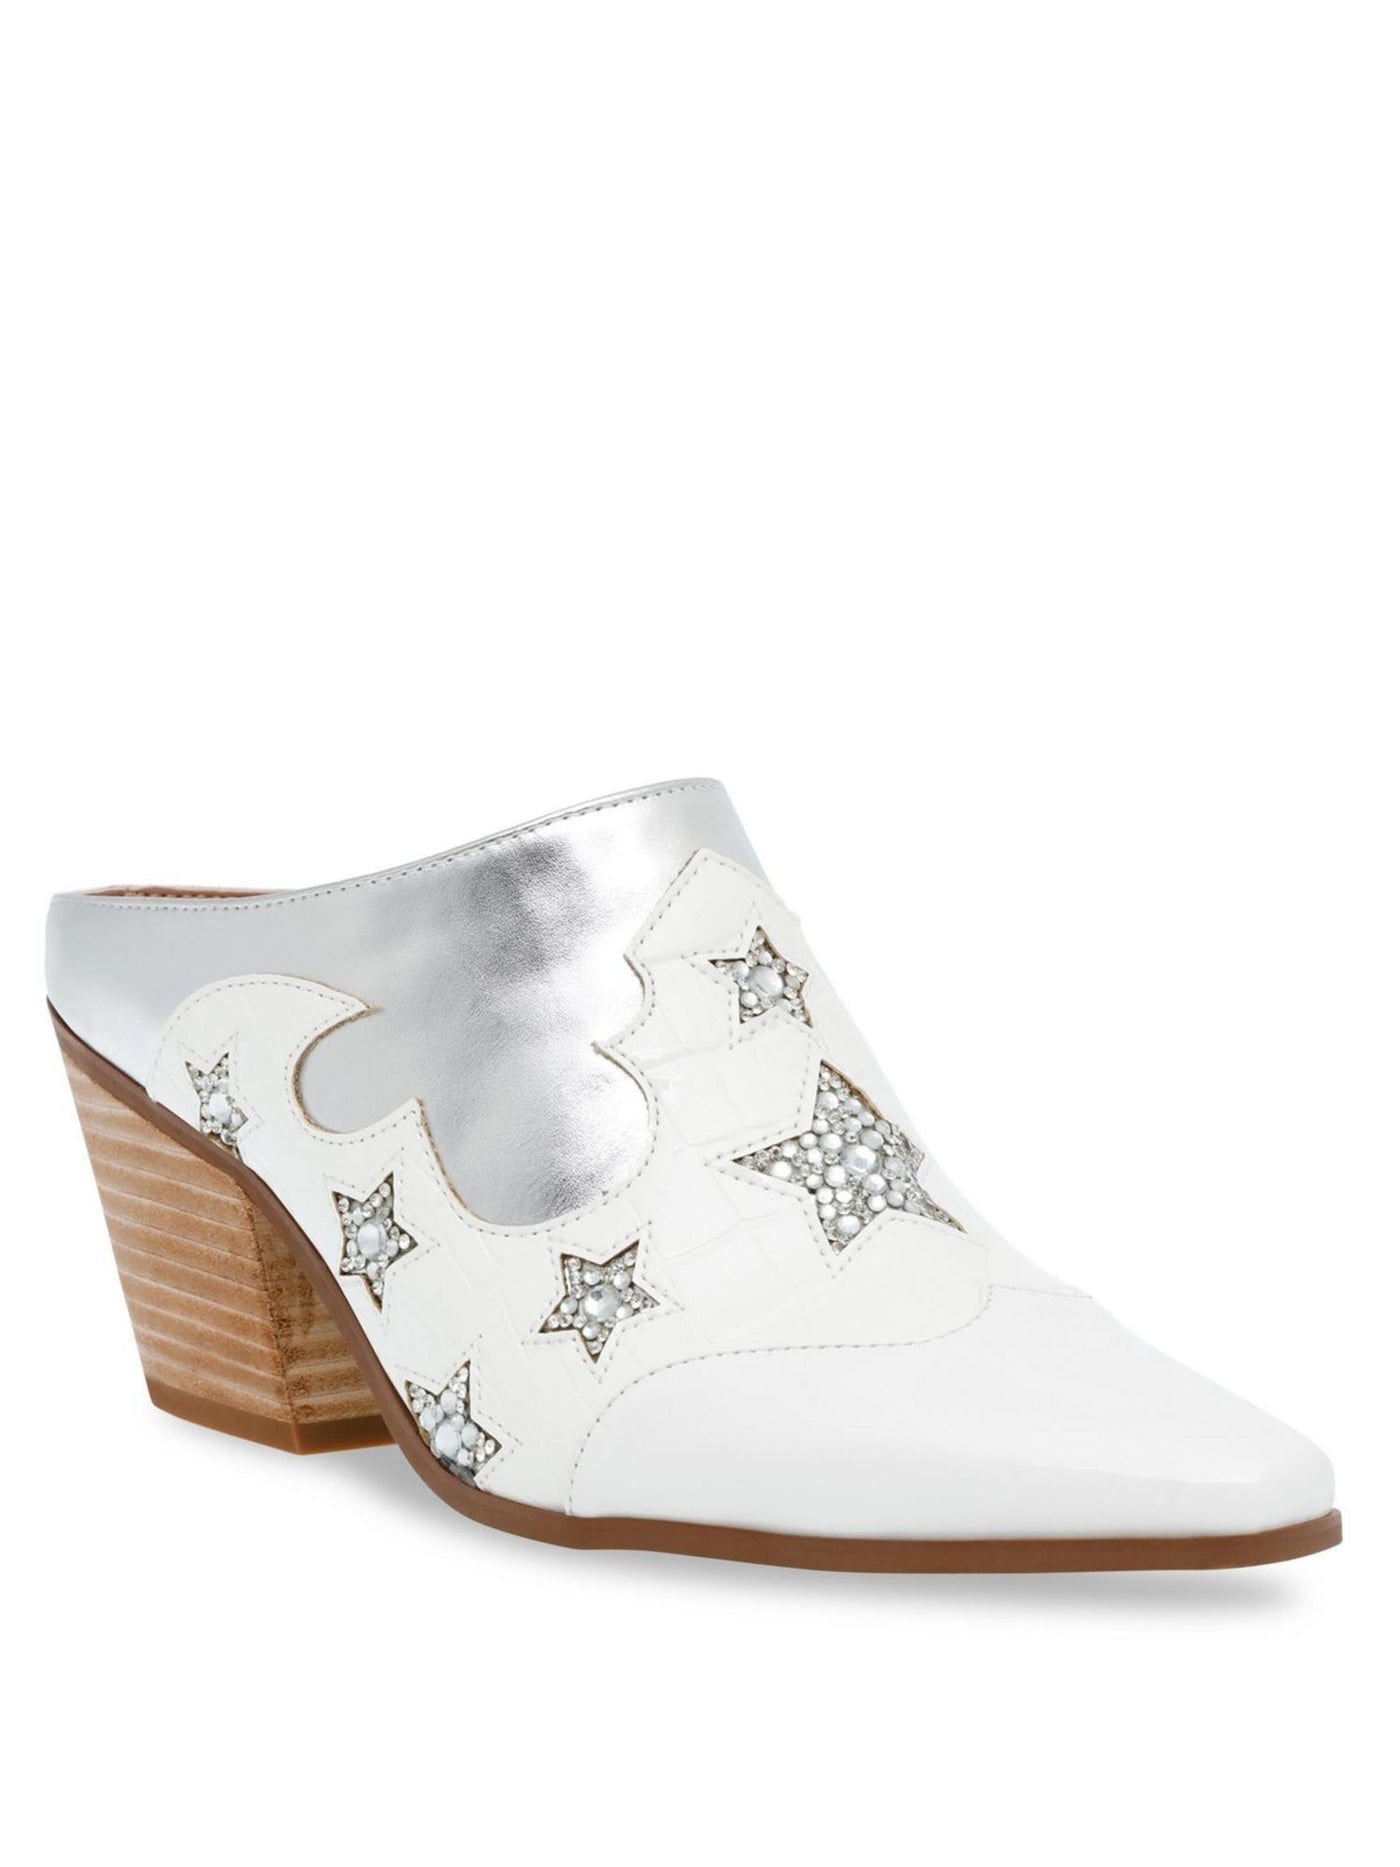 BETSEY JOHNSON Womens White Patterned Metallic Dennis Almond Toe Stacked Heel Slip On Heeled Mules Shoes 6.5 M